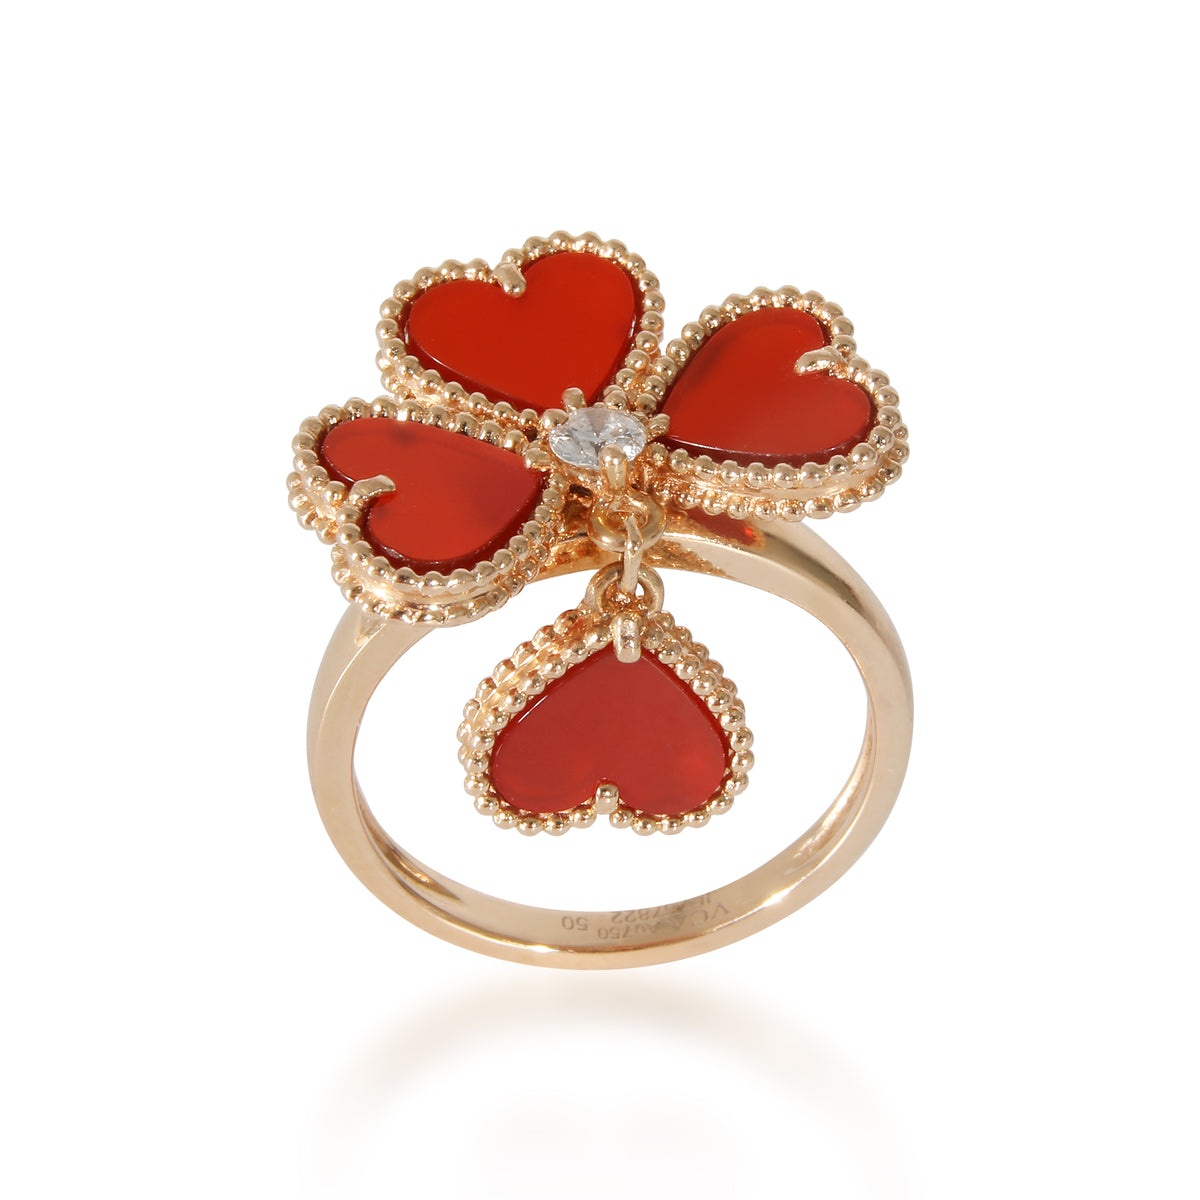 Van Cleef & Arpels - Sweet Alhambra Effeuillage Ring - Ring Woman Pink gold/Carnelian/Diamond